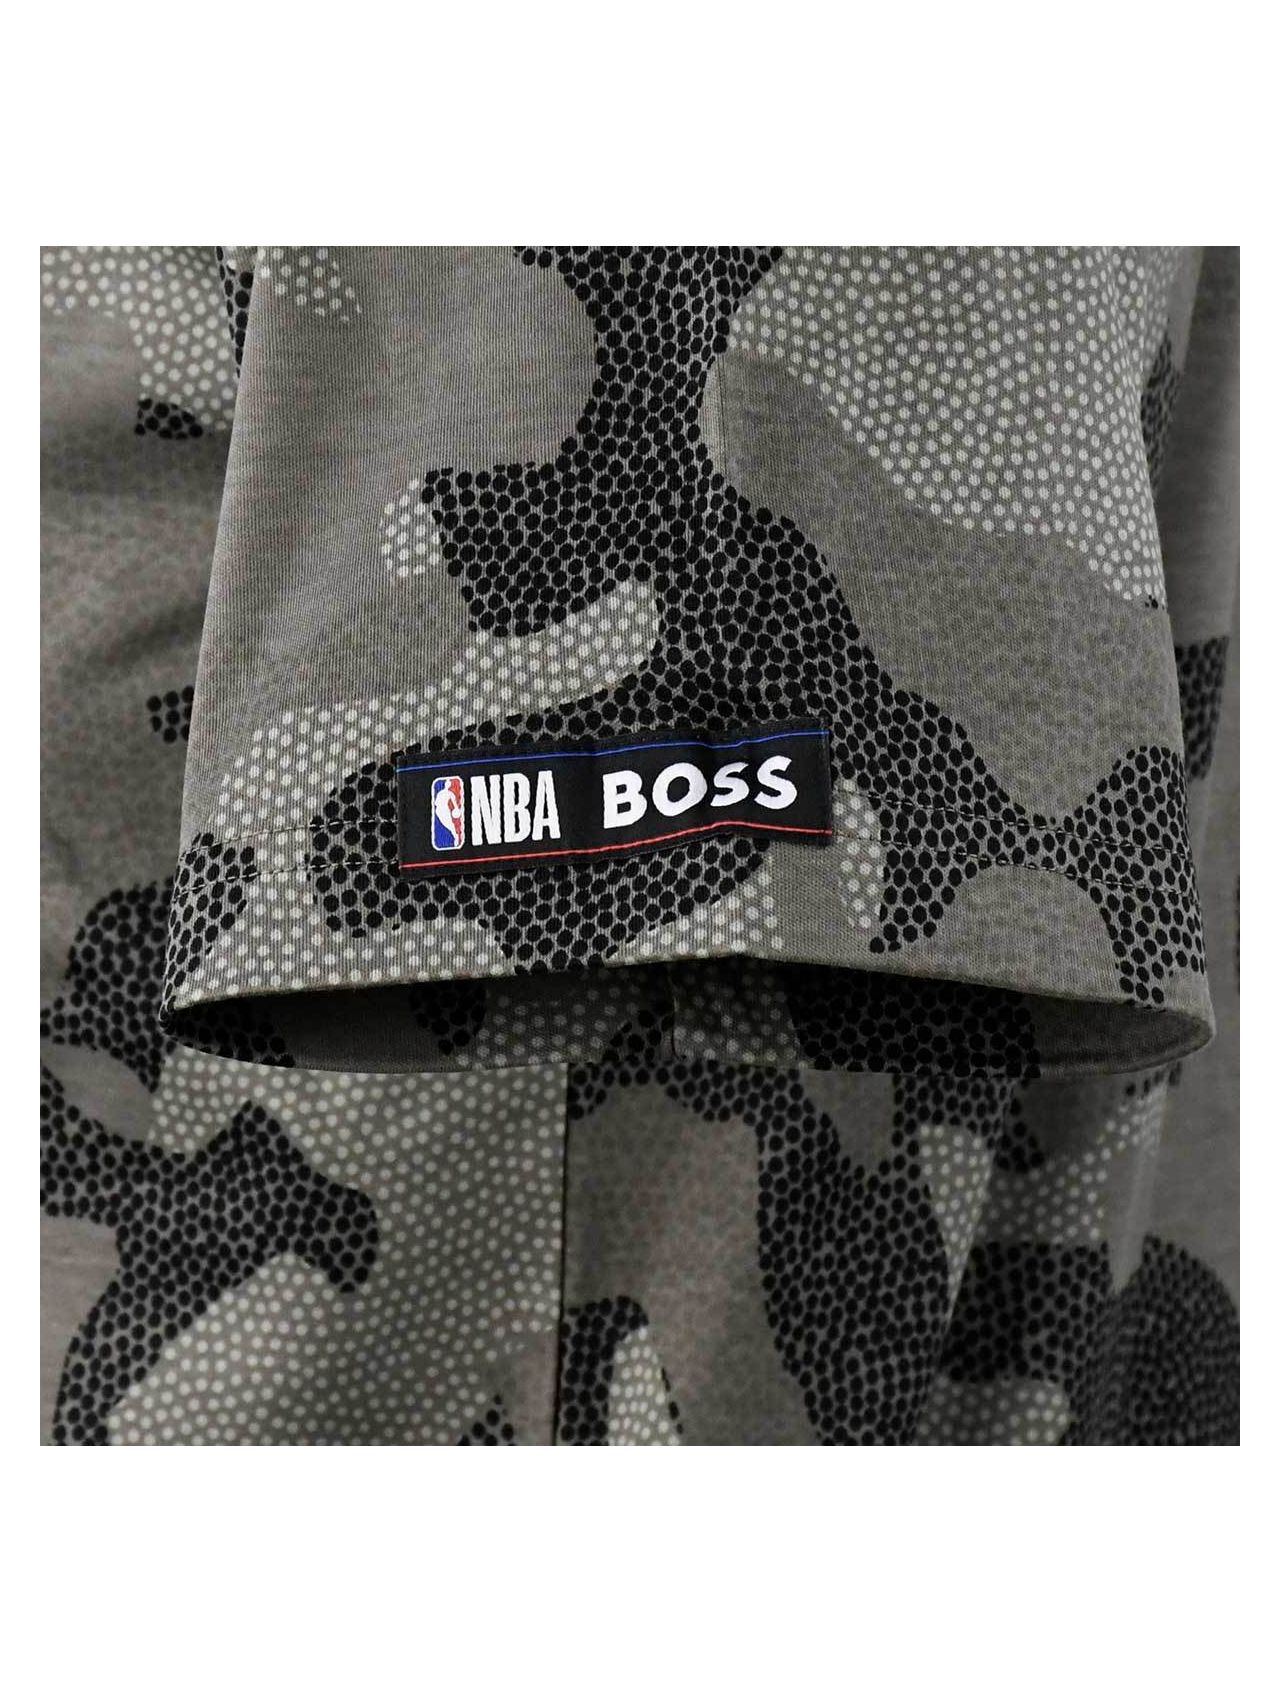 Boss x NBA Tbasket Stretch Cotton Graphic Tee in Medium Grey